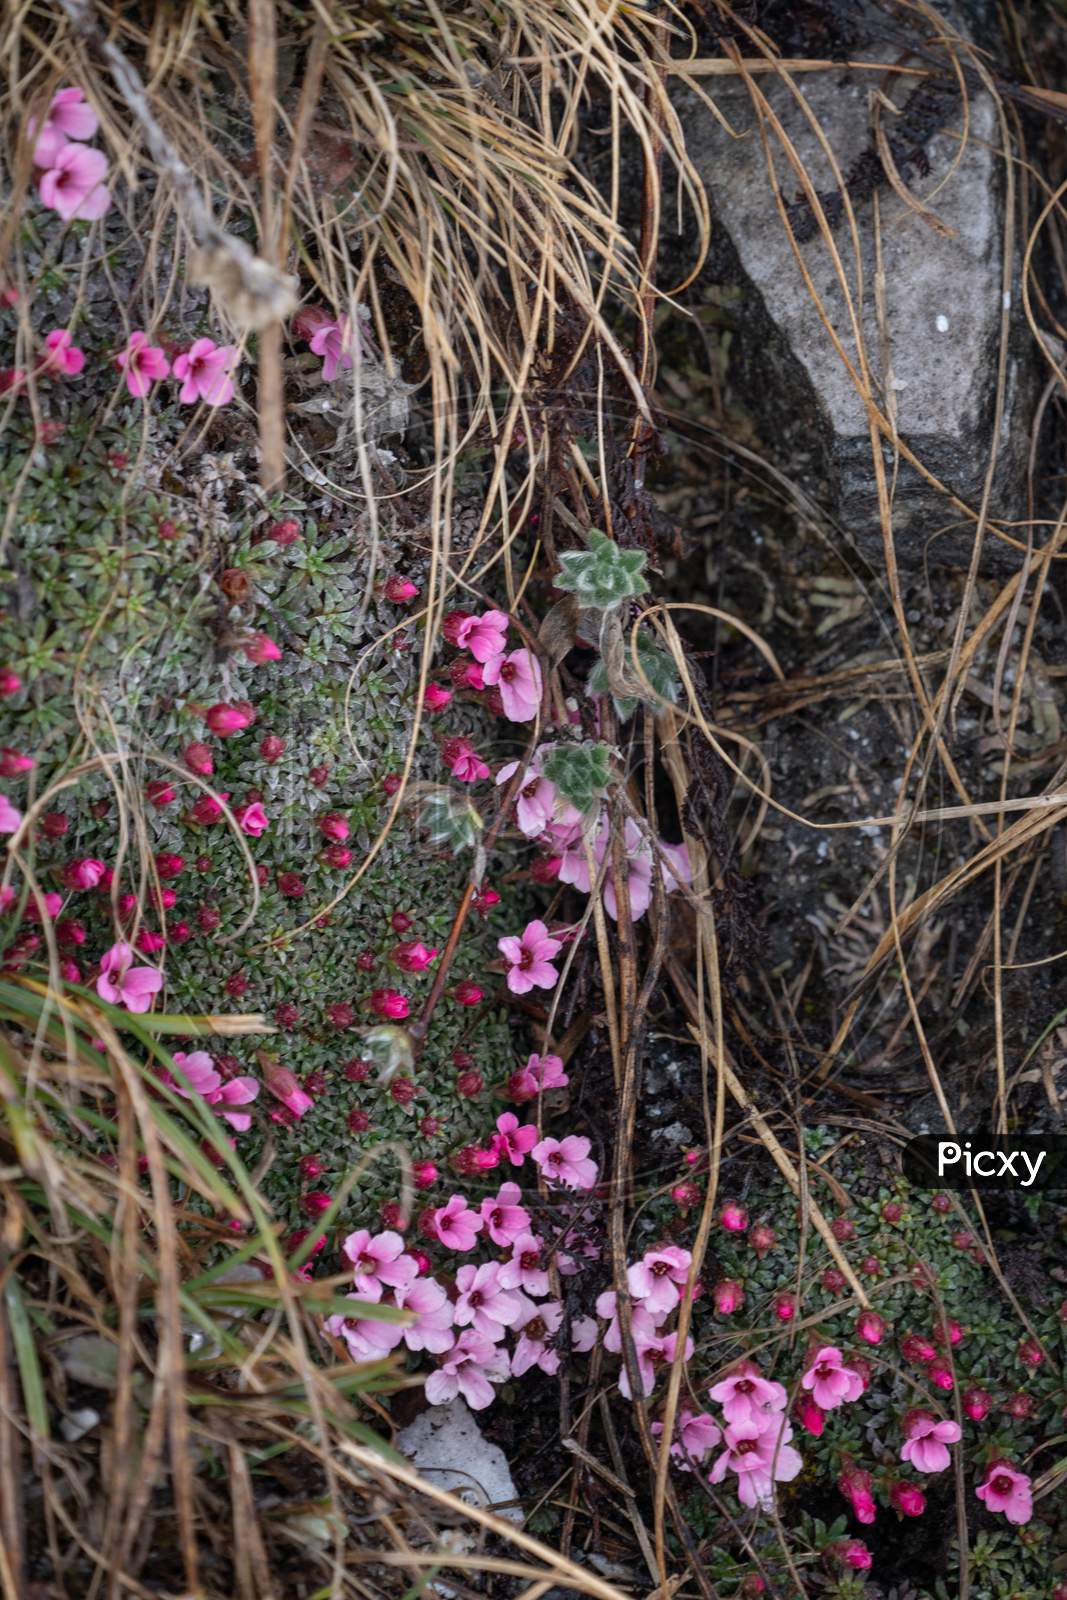 Garden Phox flowers along the rock body